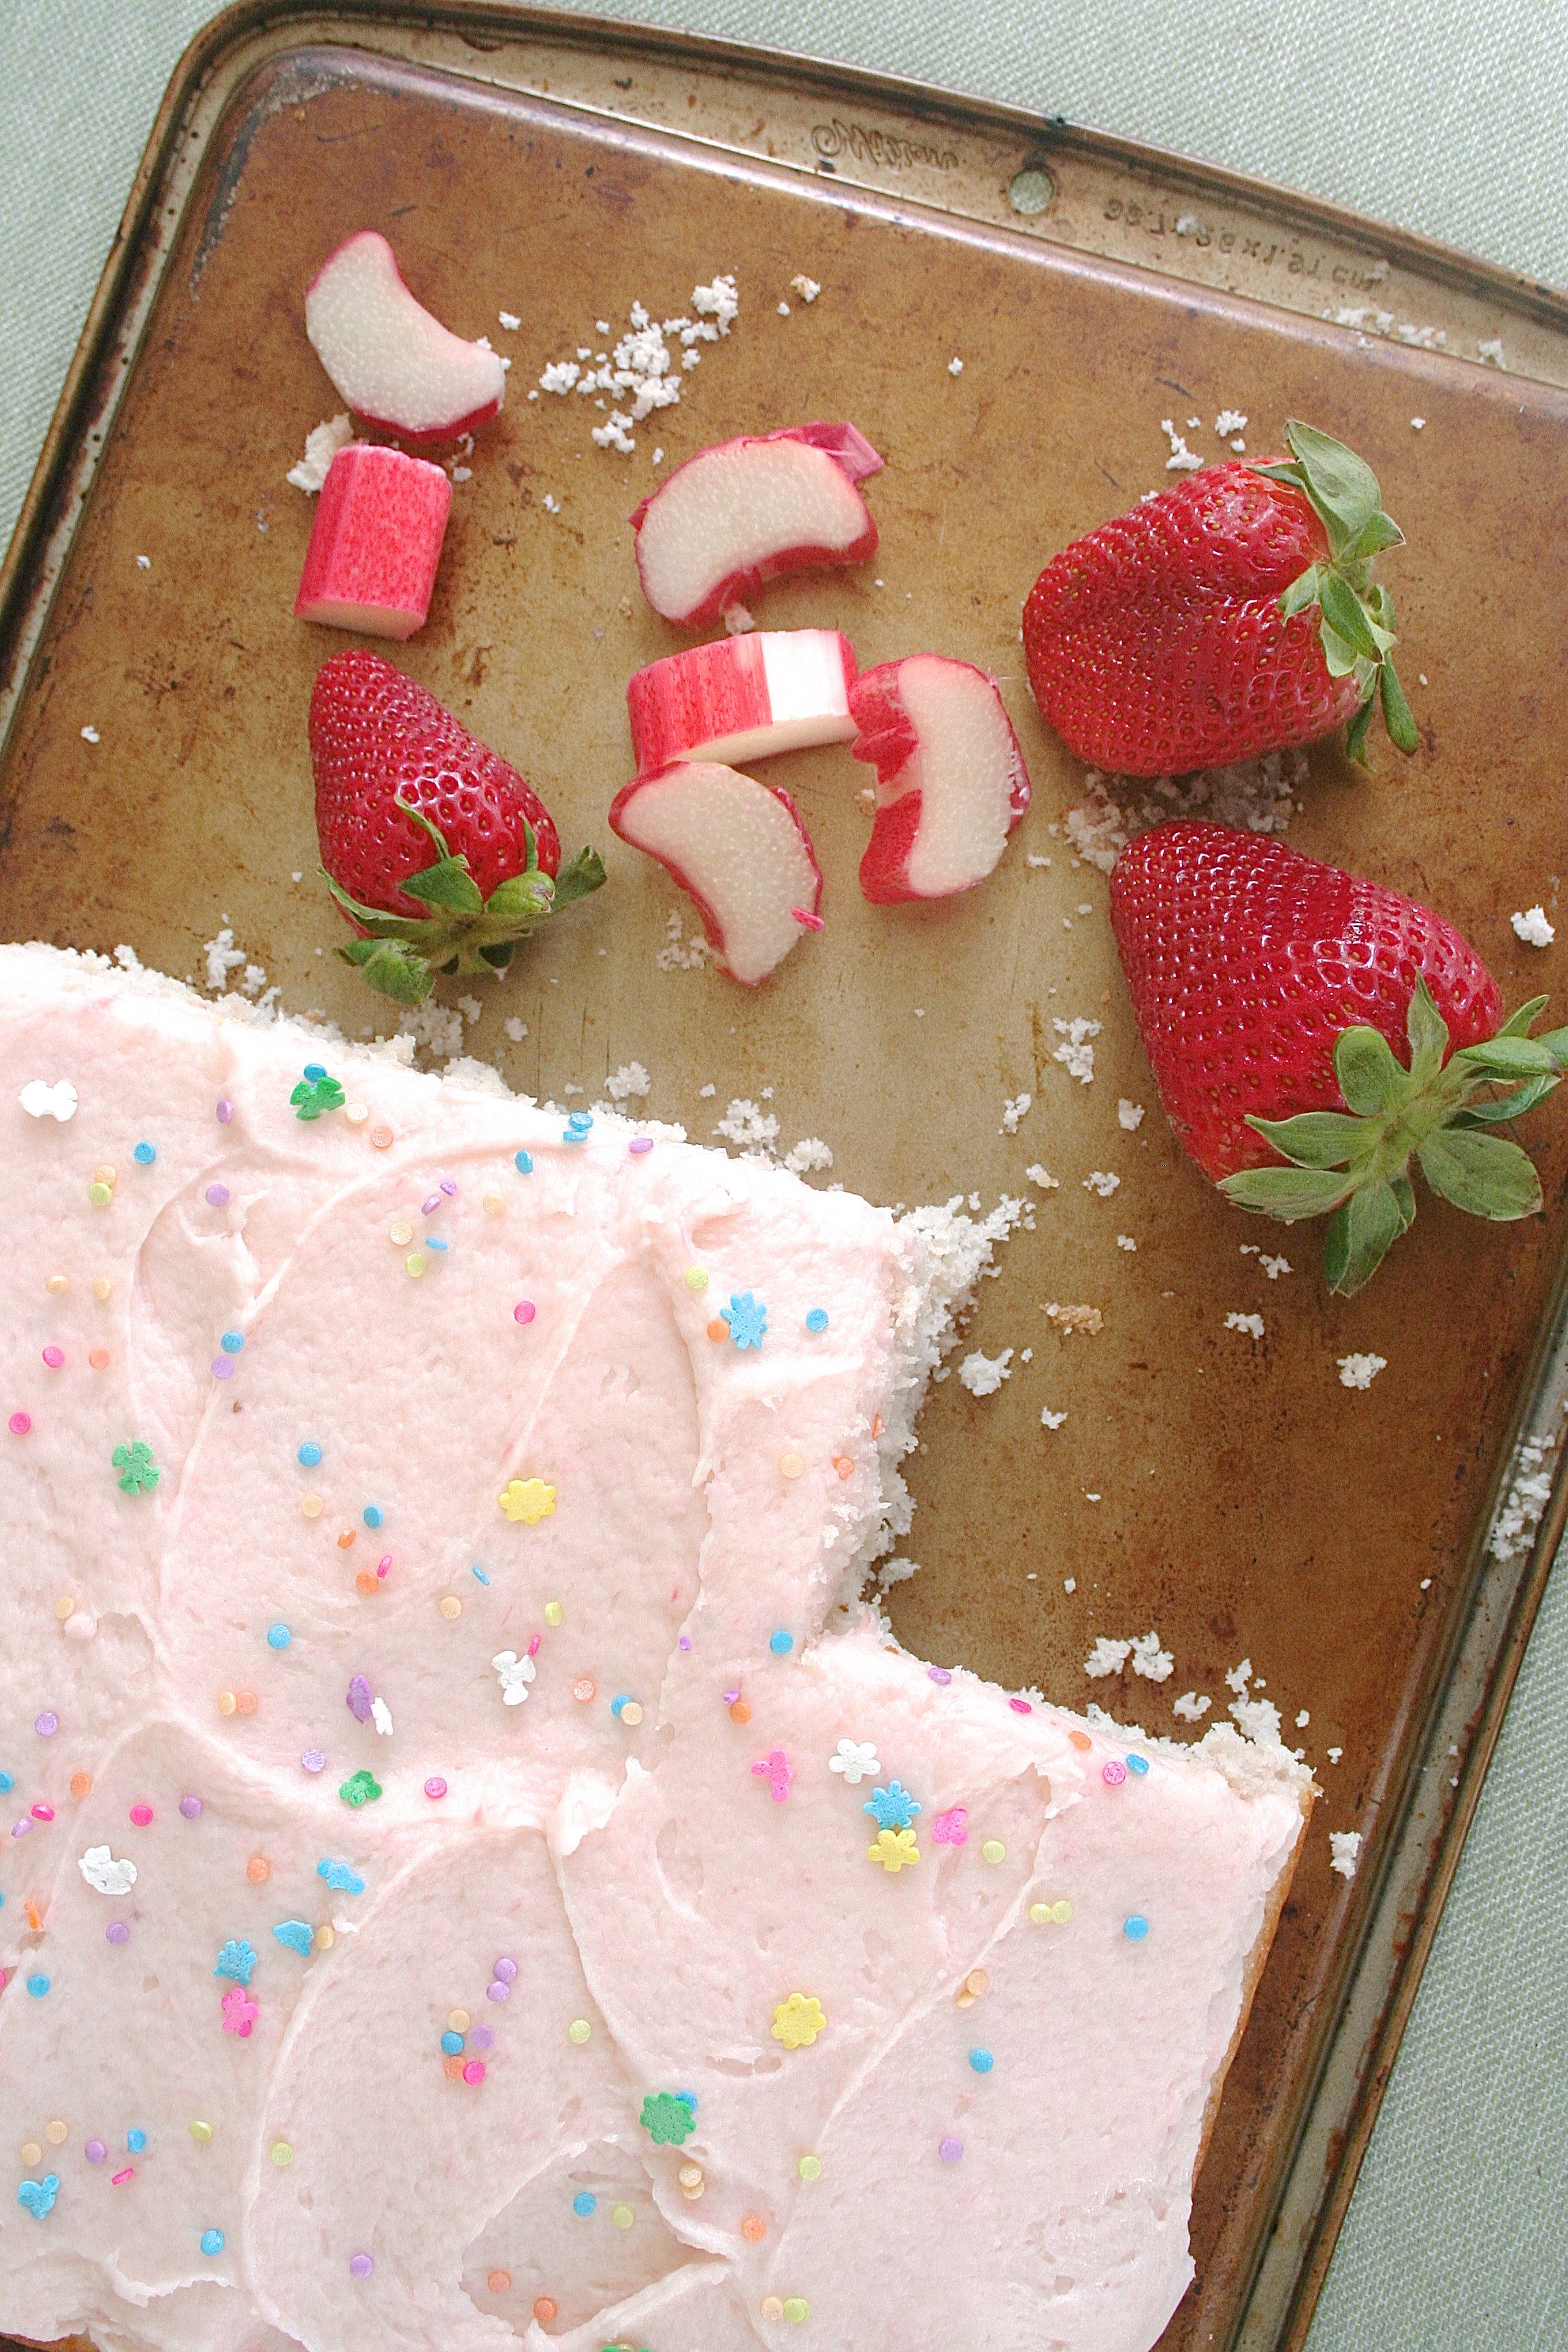 strawberry rhubabrb cake